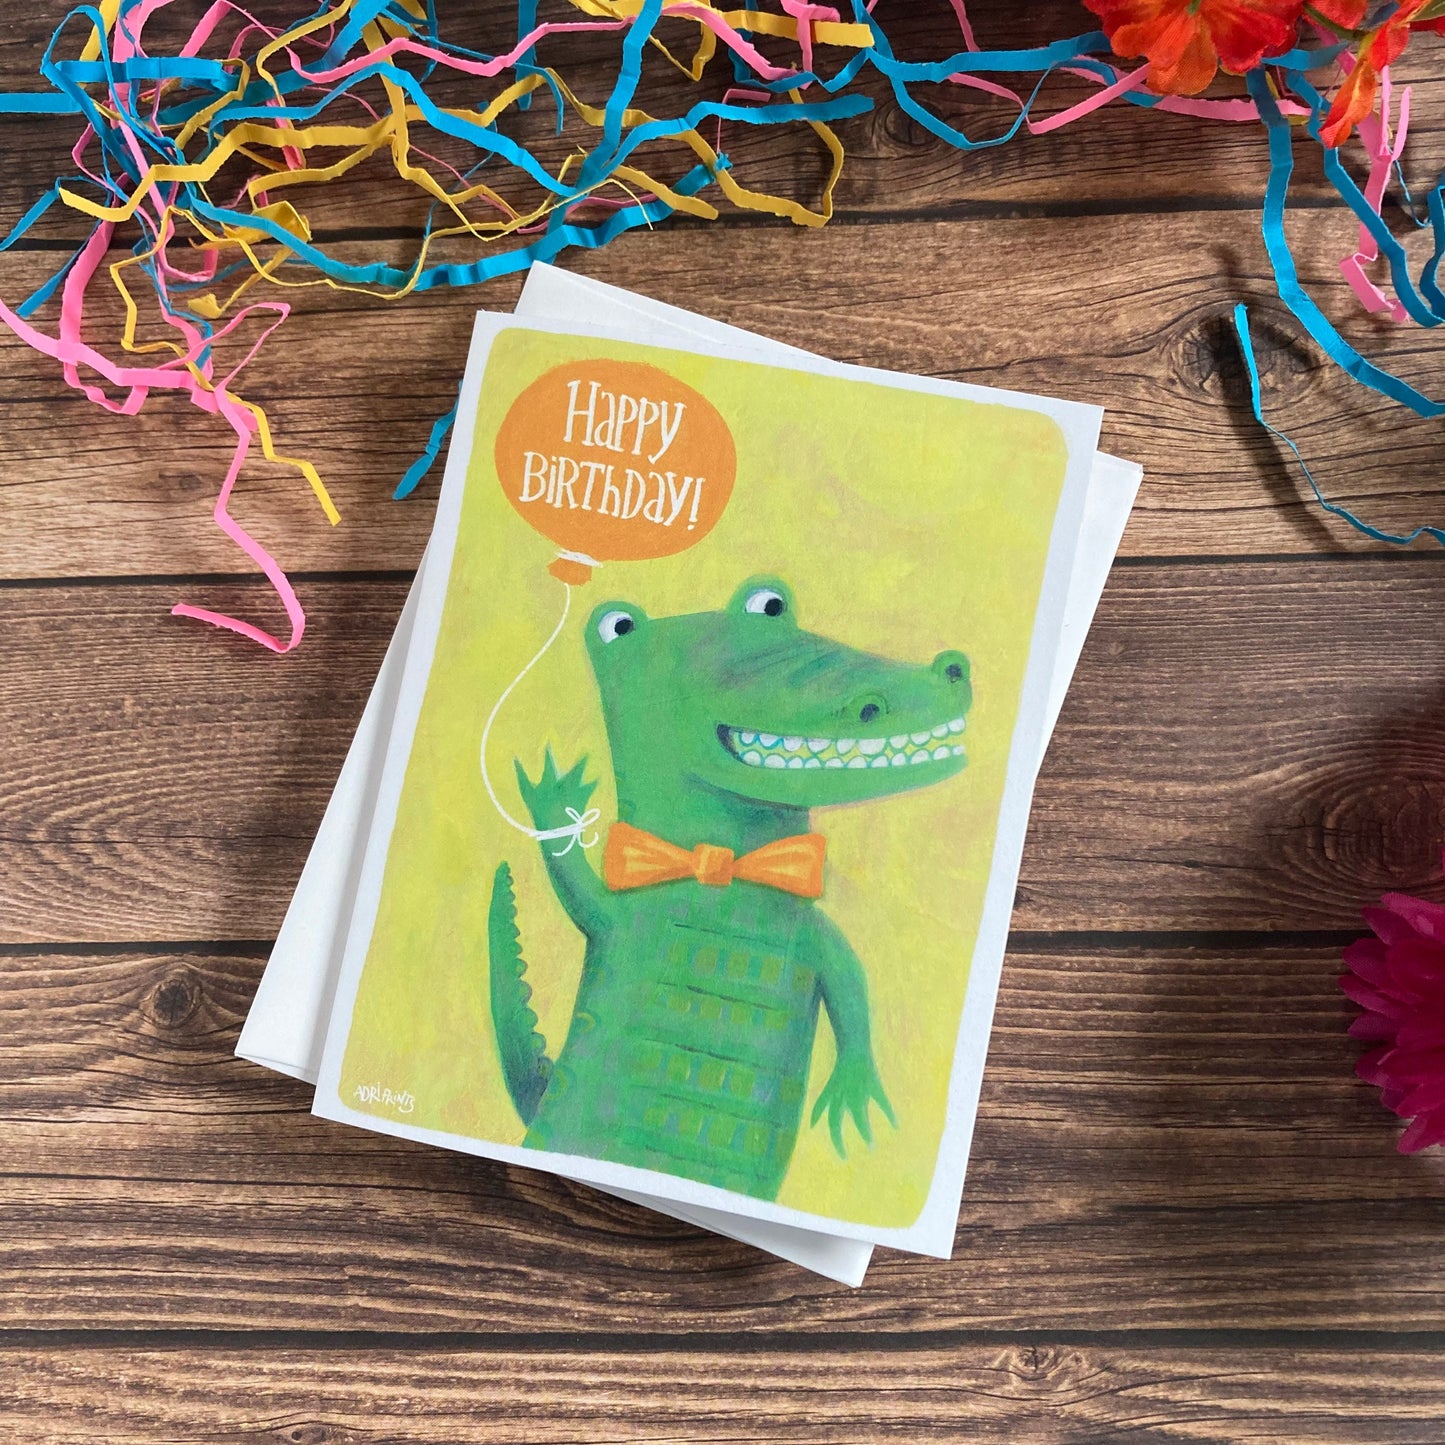 BIRTHDAY - Gator Crocodile Birthday Card, art by Adriana Bergstrom (Adriprints)